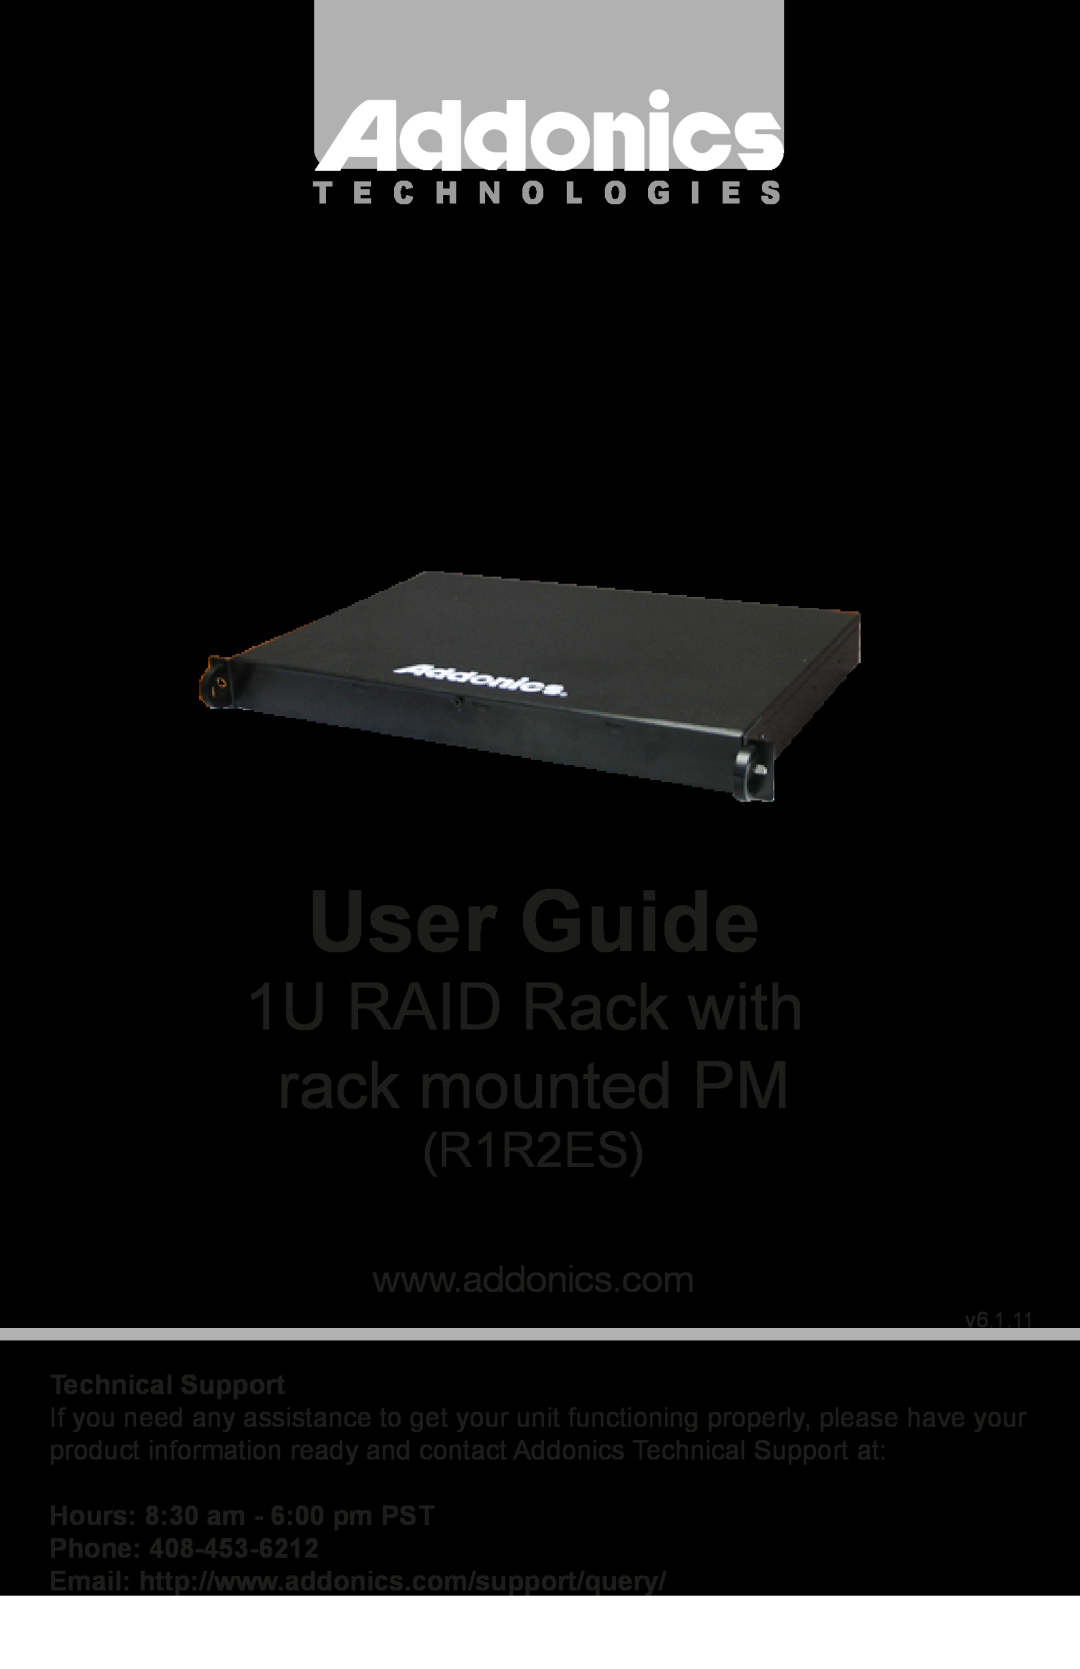 Addonics Technologies R1R2ES manual User Guide, 1U RAID Rack with rack mounted PM, T E C H N O L O G I E S, v6.1.11 